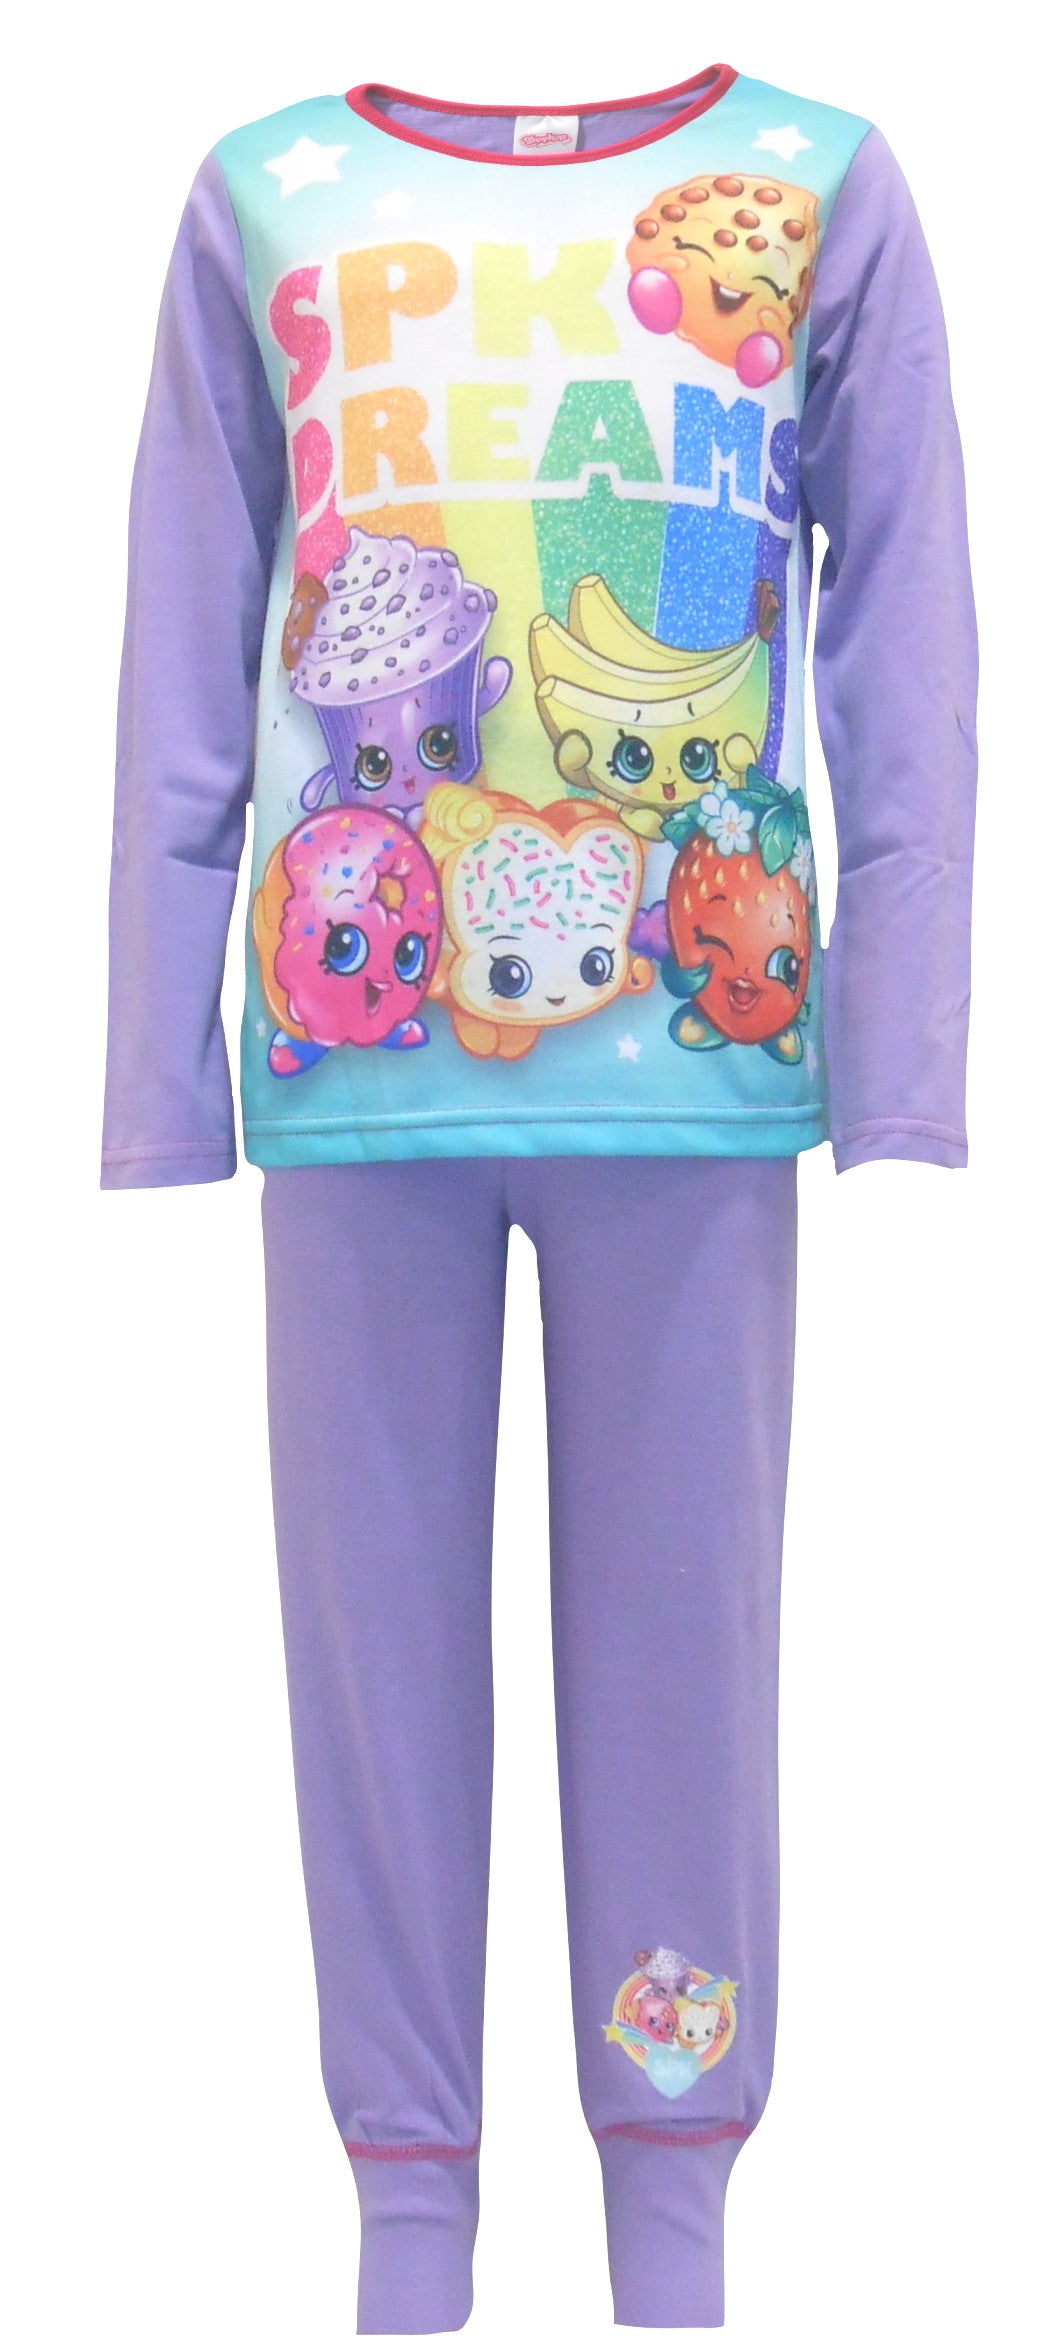 Shopkins "SPK Dreams" Girls Pyjamas